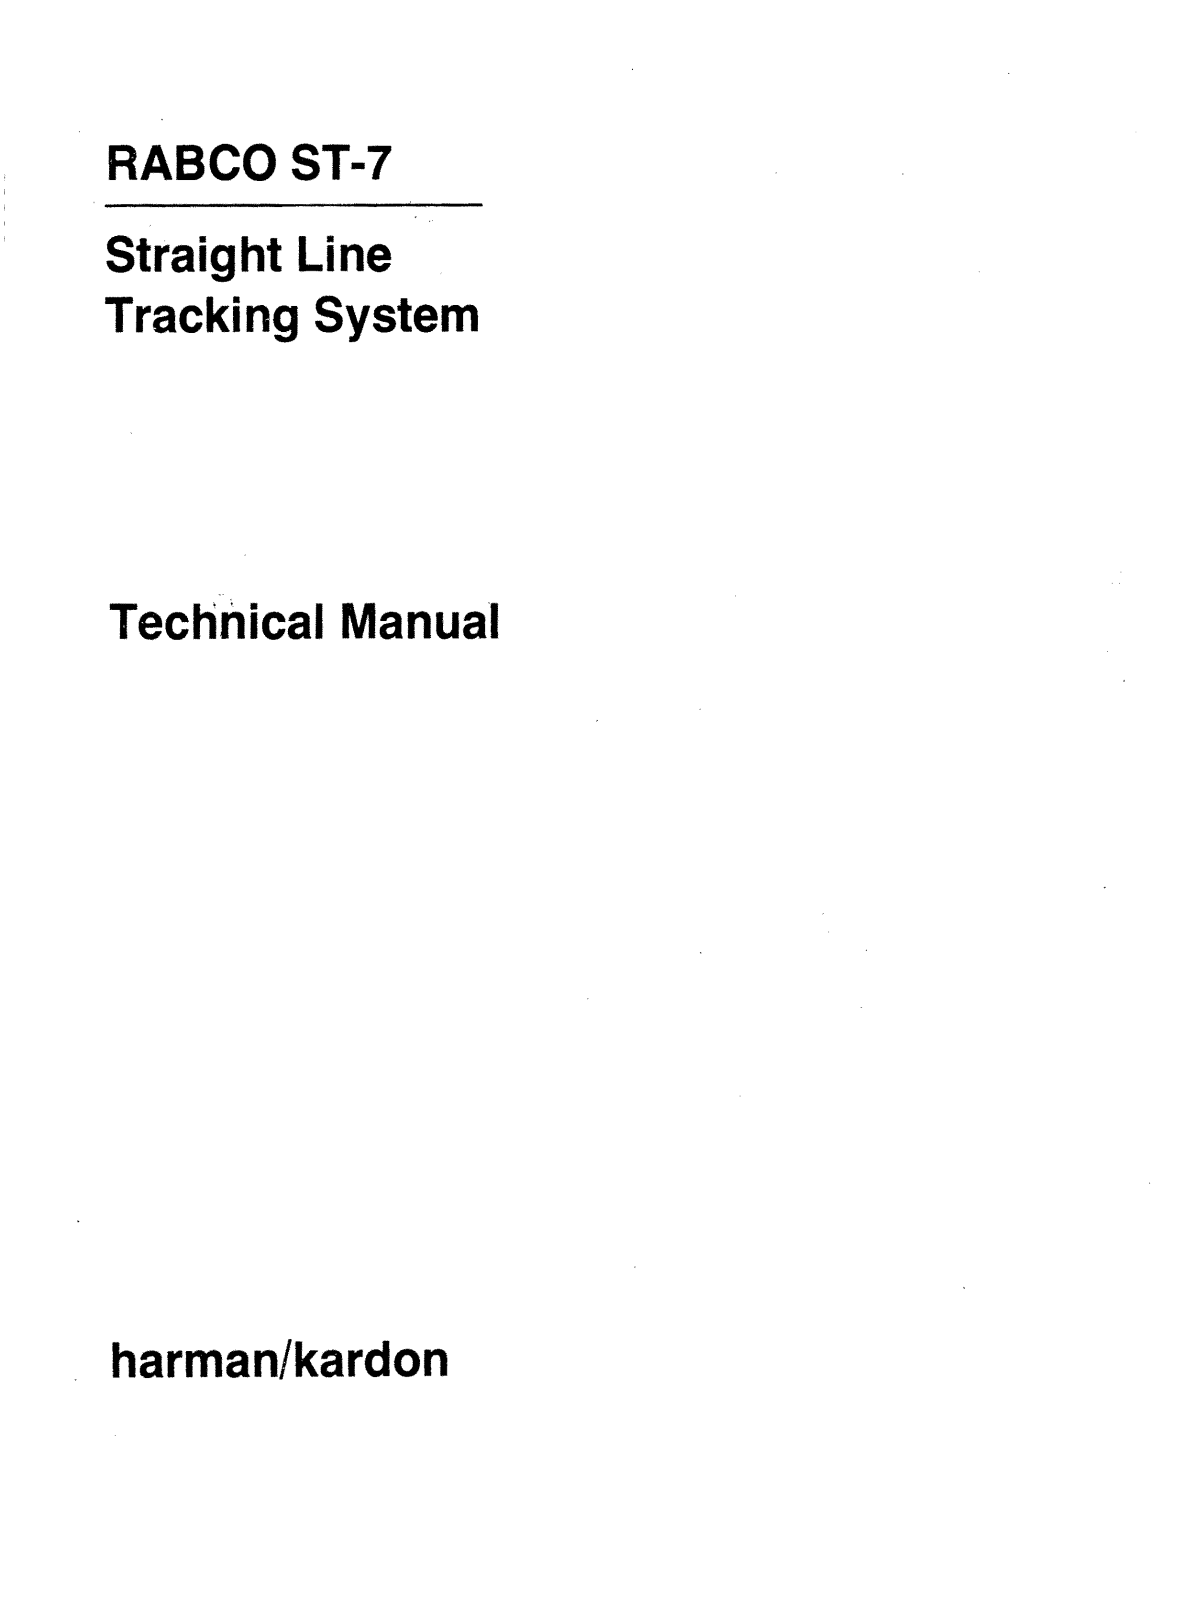 Harman Kardon Rabco ST-7 Service manual